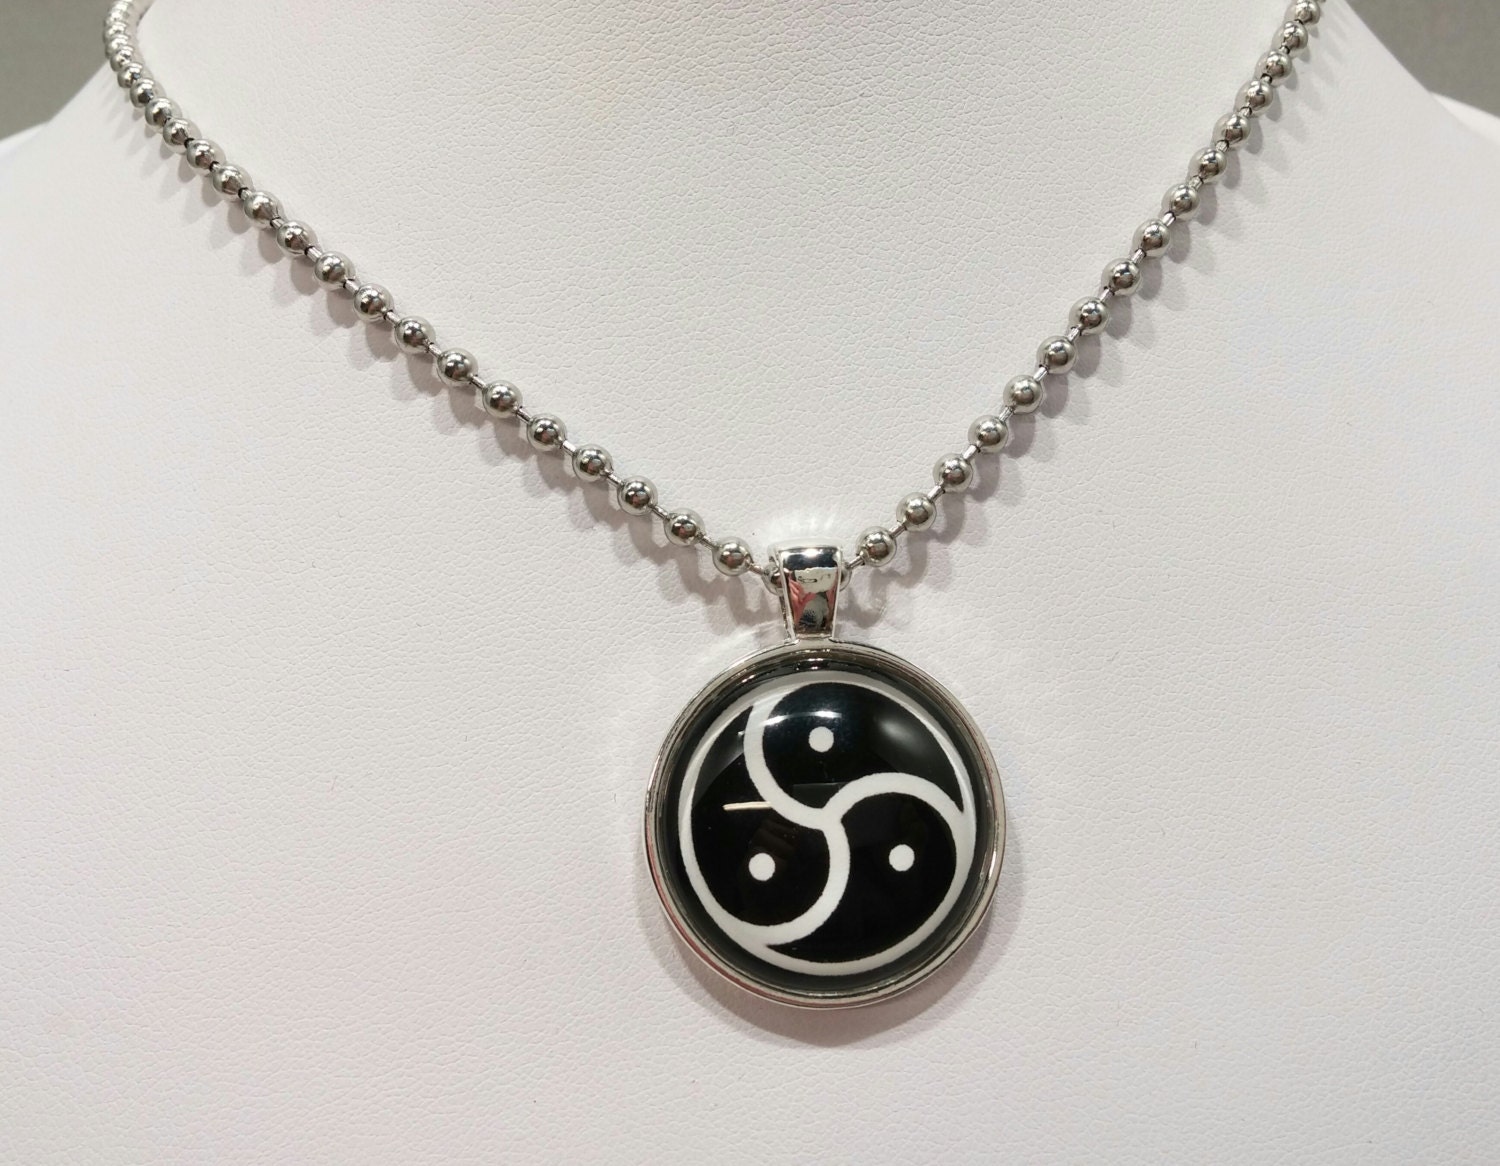 Bdsm symbol pendant jewelry